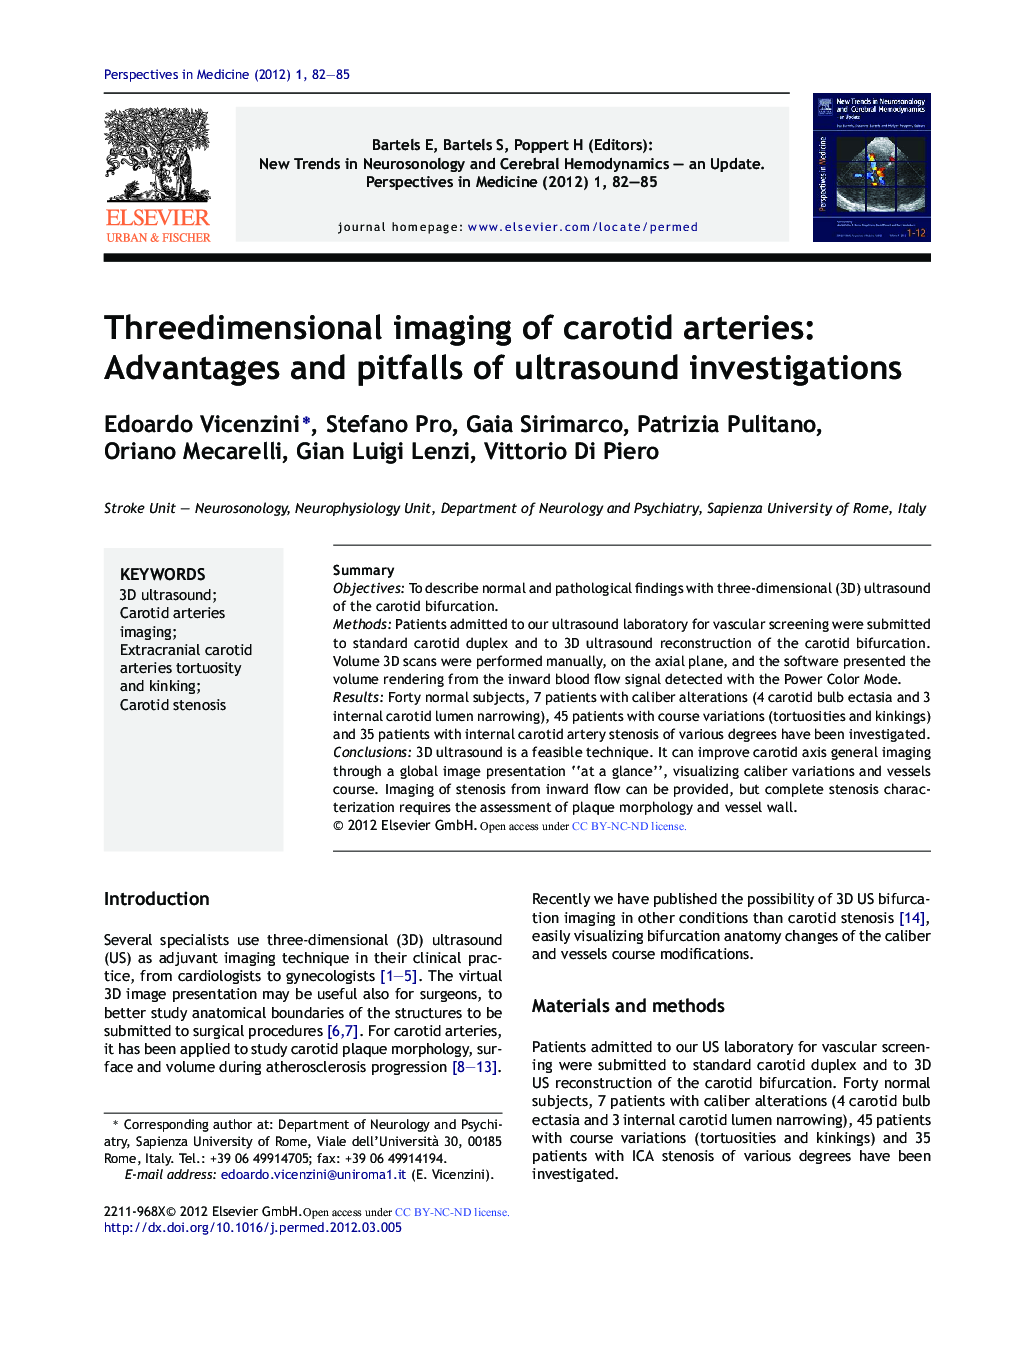 Threedimensional imaging of carotid arteries: Advantages and pitfalls of ultrasound investigations